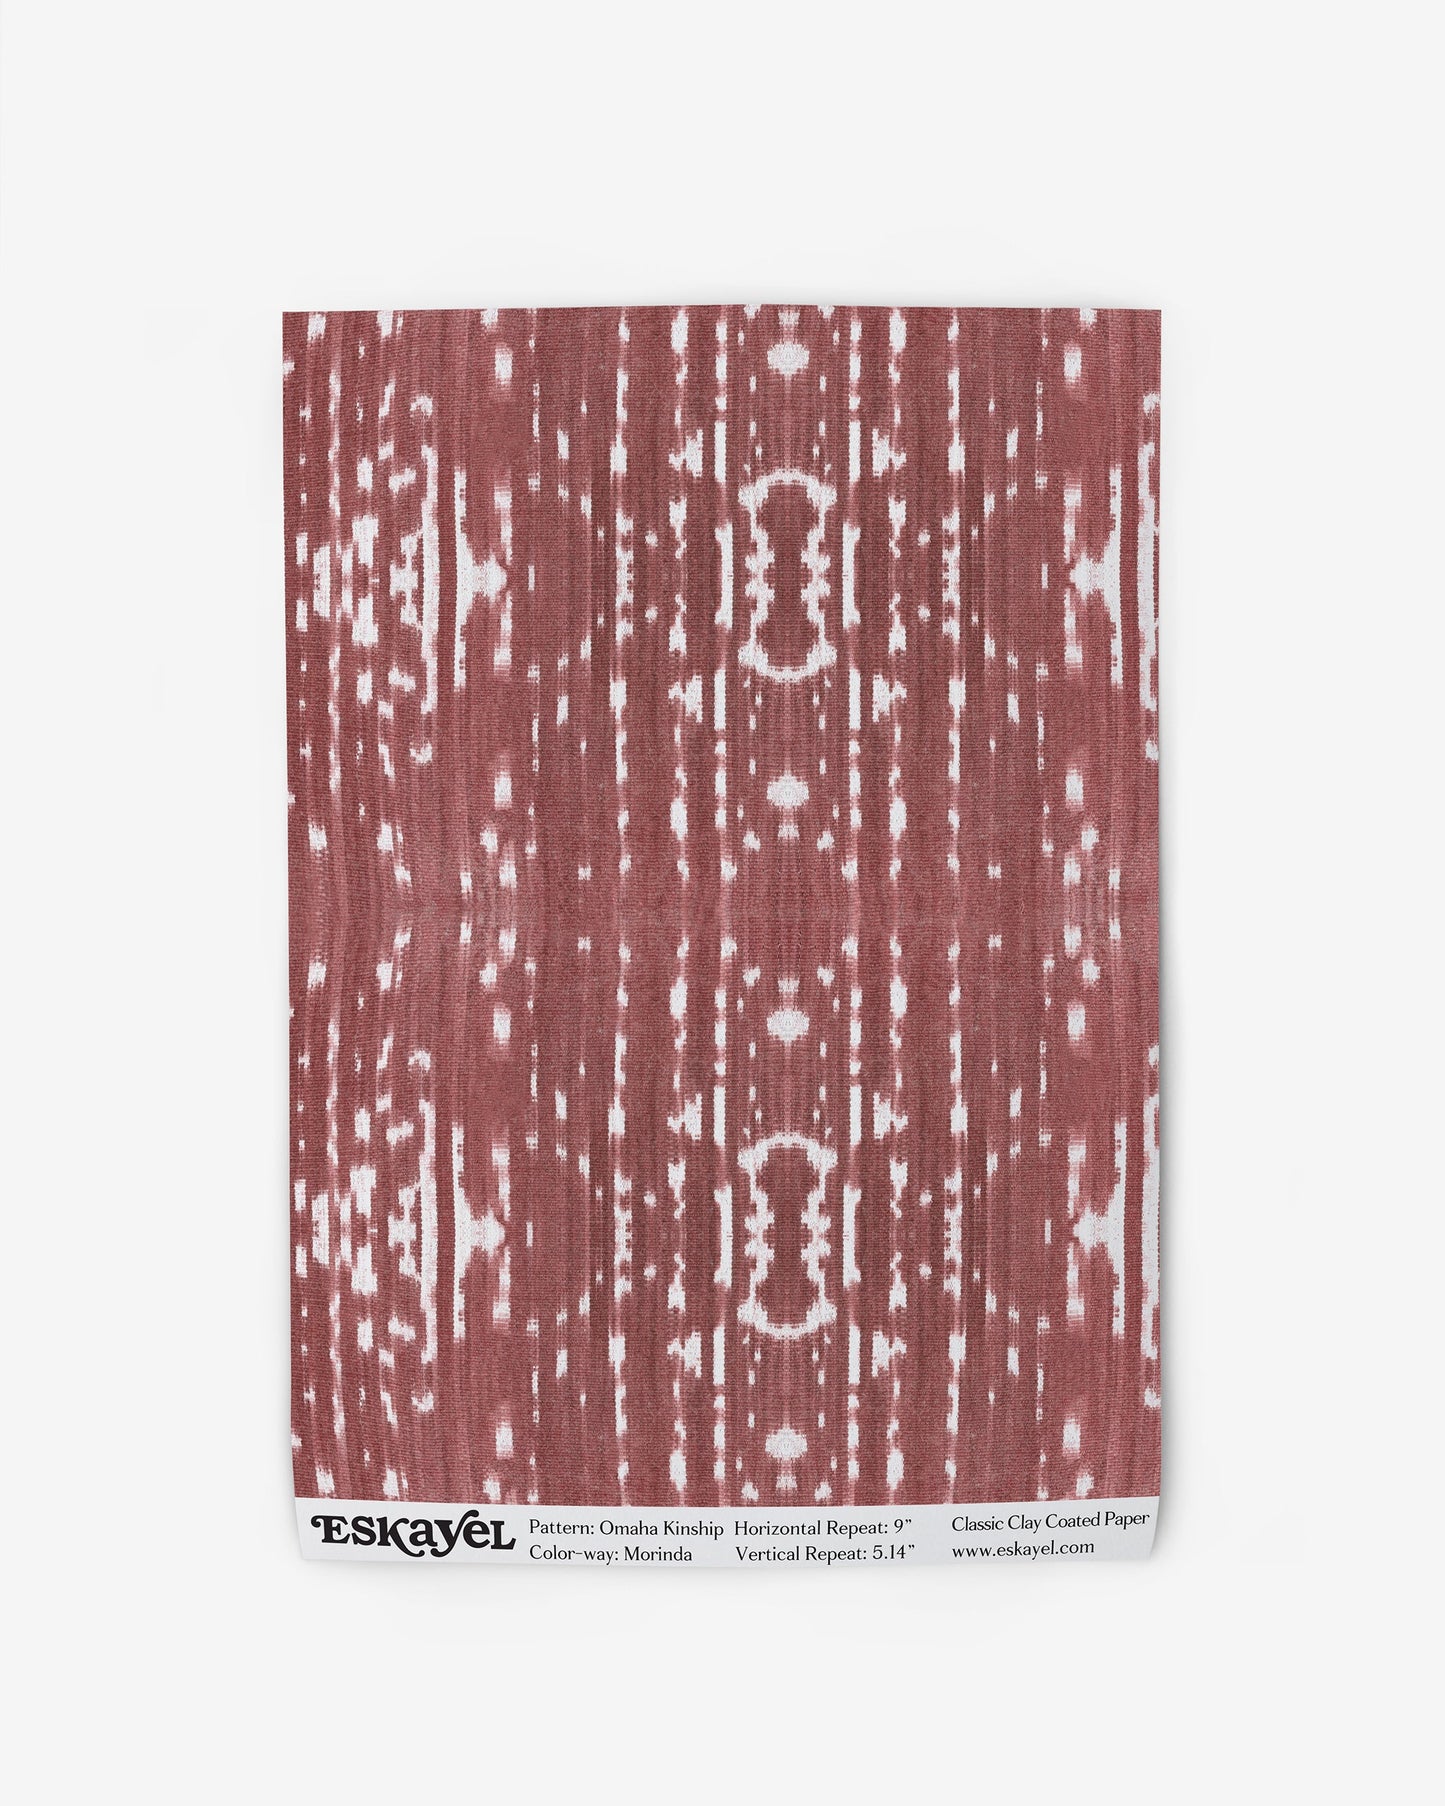 A red and white abstract pattern on Omaha Kinship Wallpaper Morinda Ikat